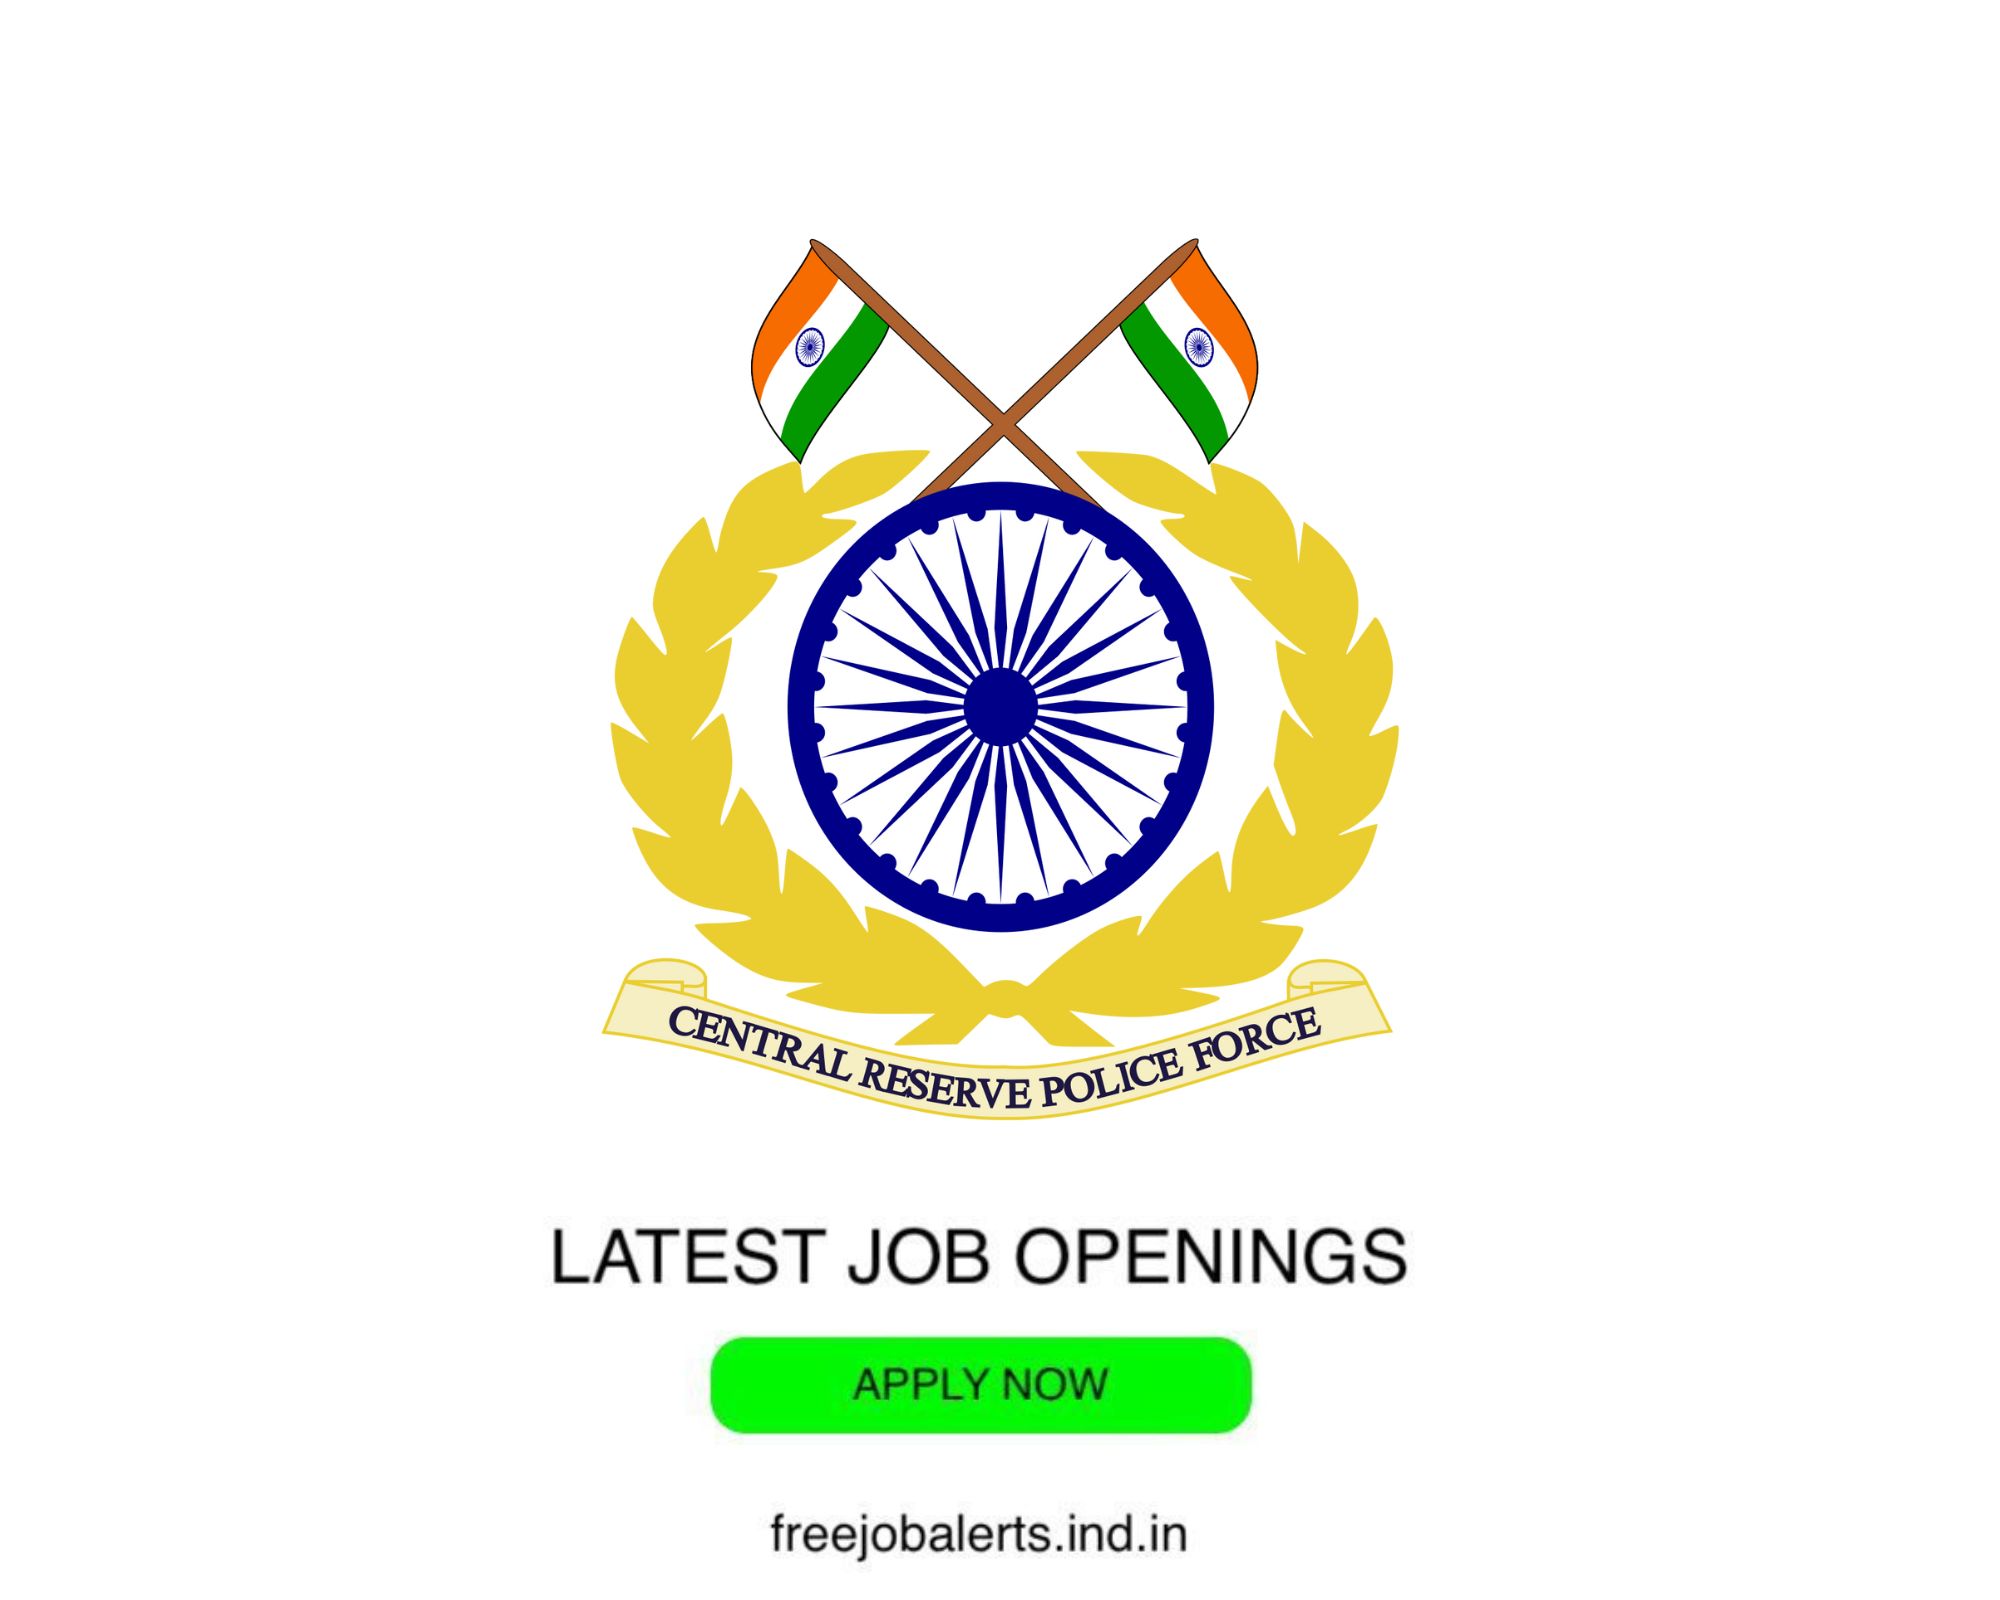 CRPF - Central Reserve Police Force - Latest Govt job openings - Free job alerts, Indian Govt Jobs